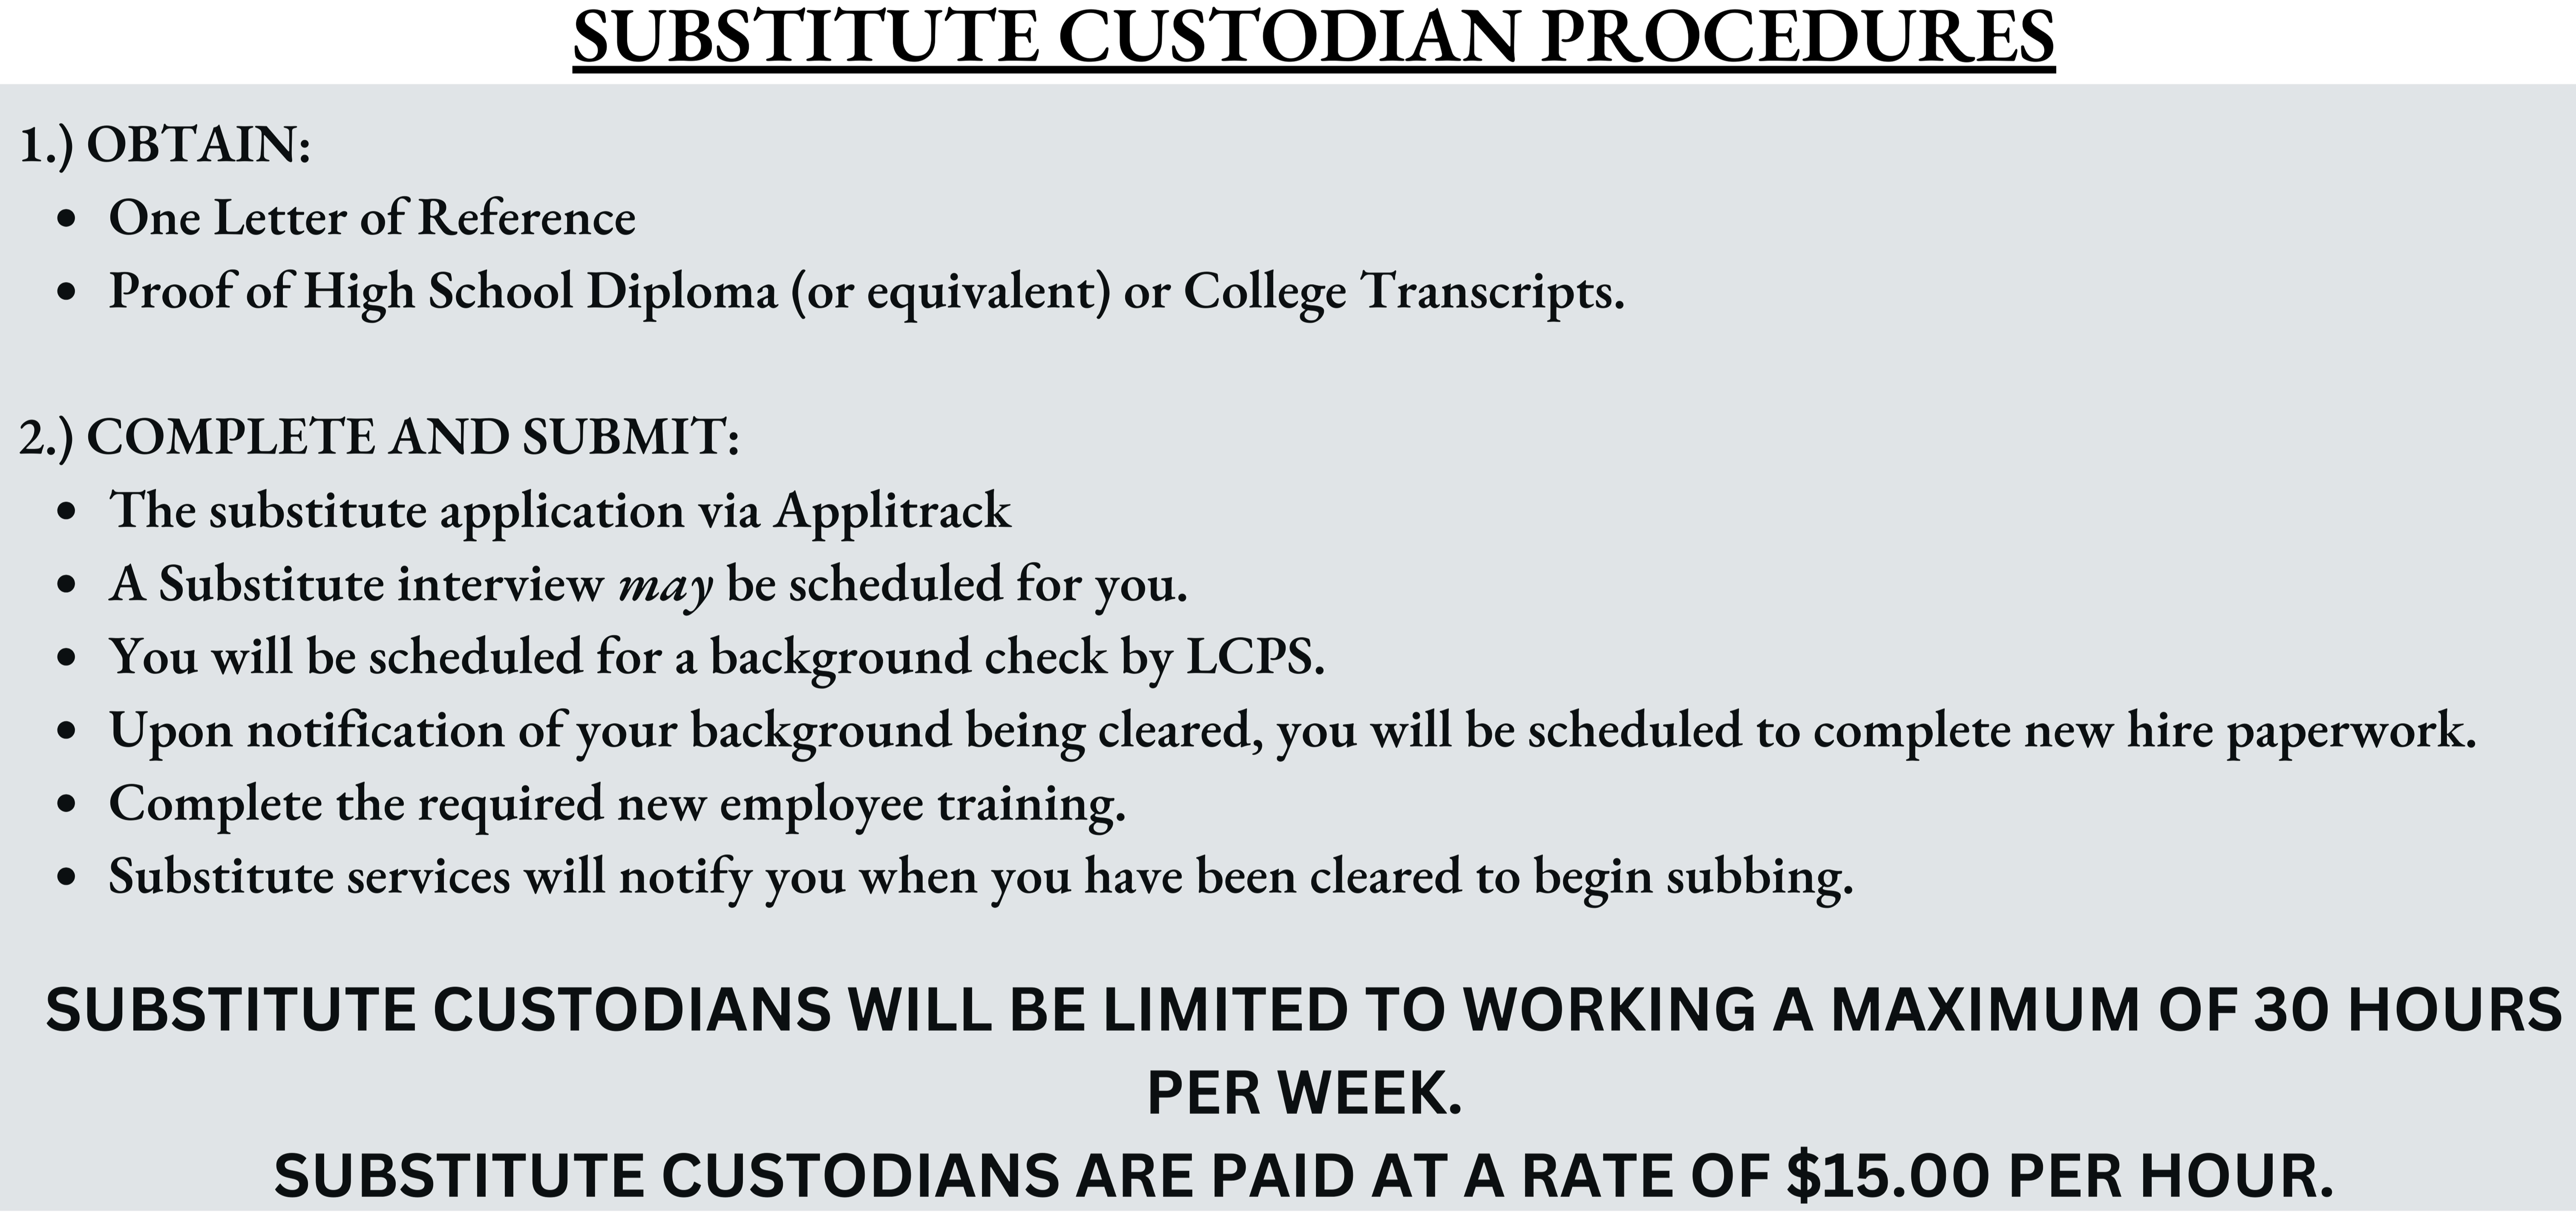 sub custodian procedures